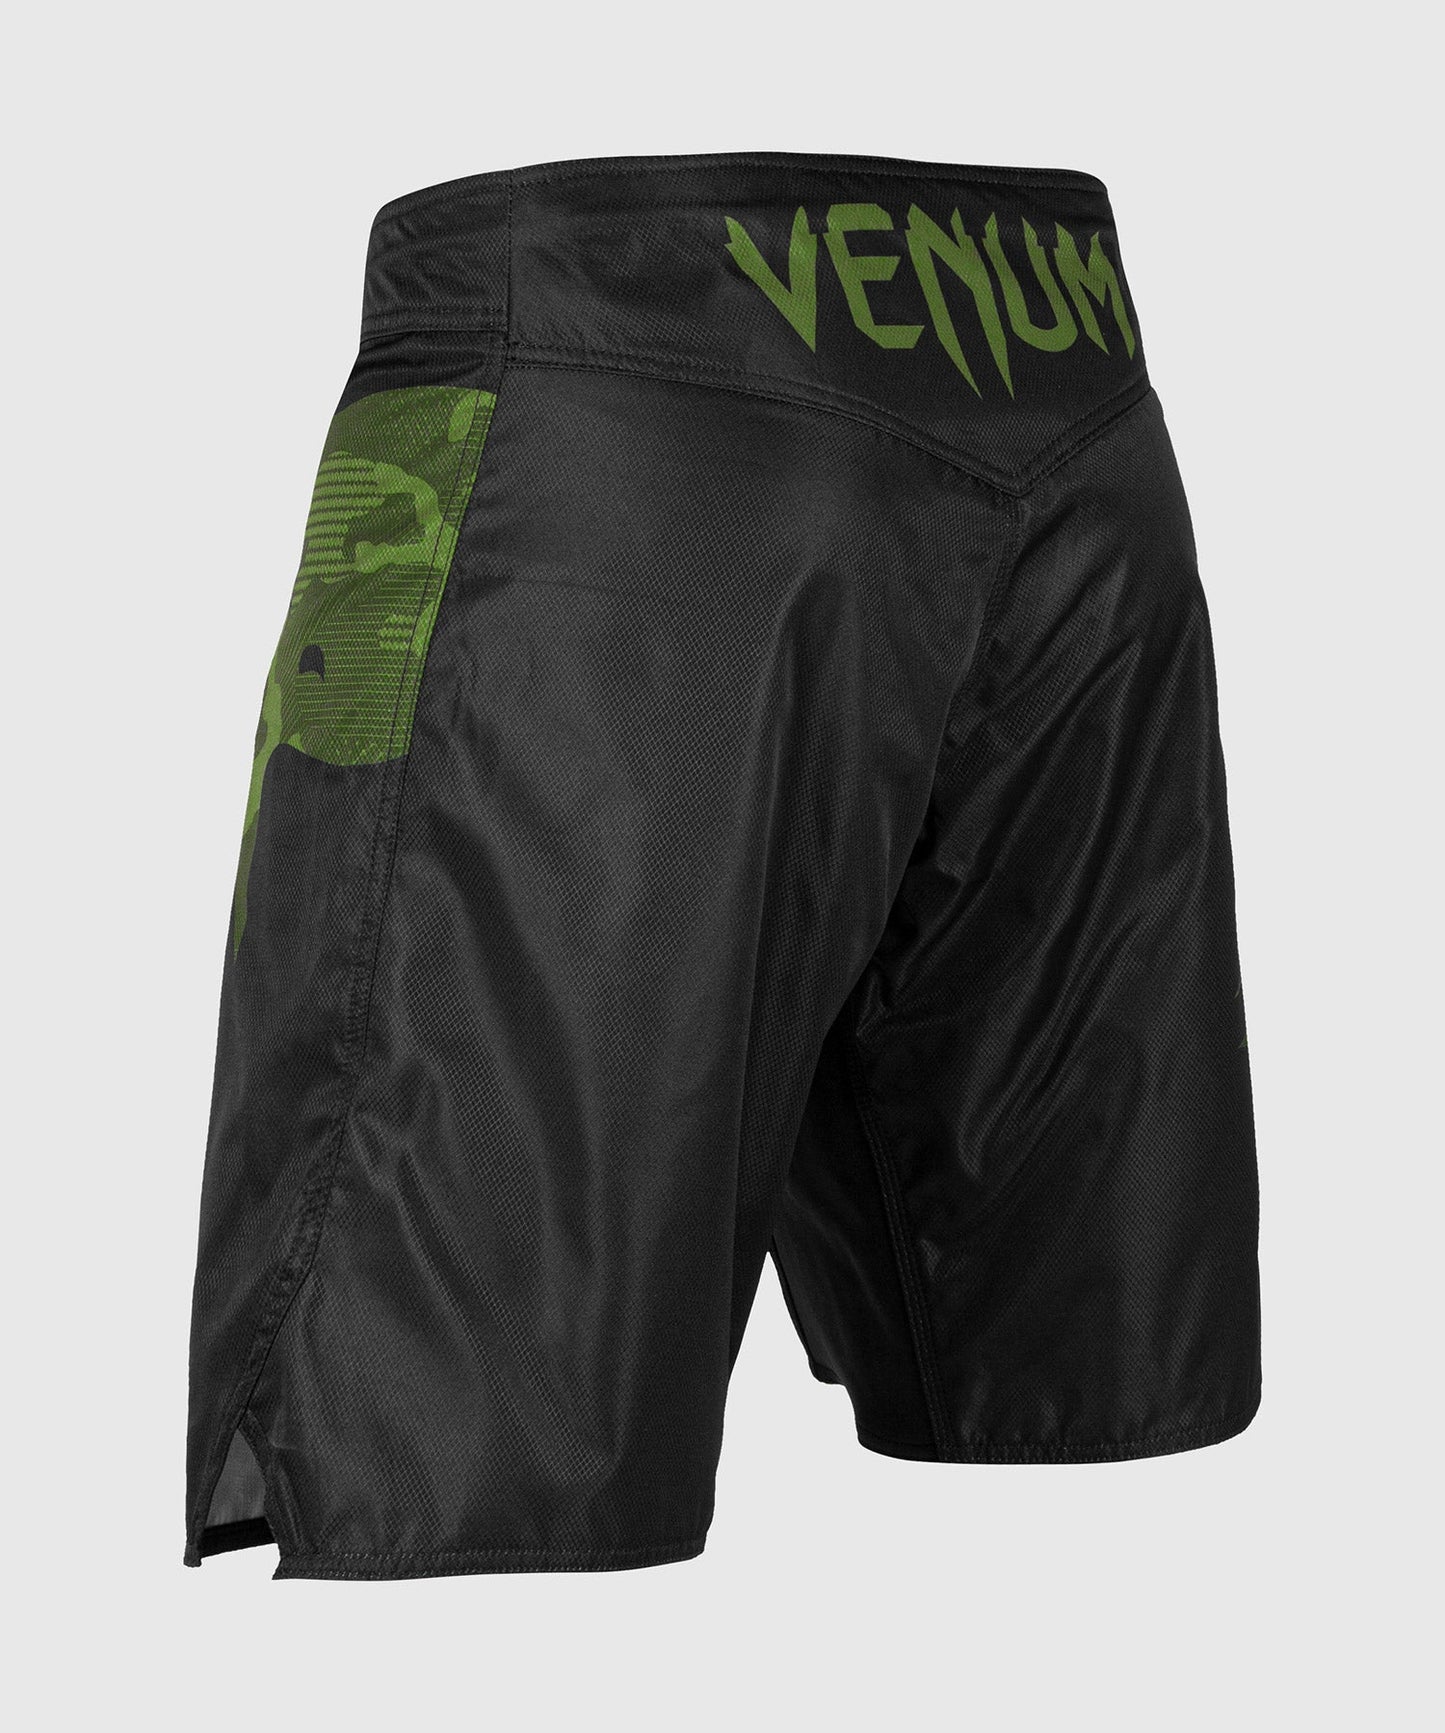 Venum Light 3.0 Fightshorts - Khaki/Black